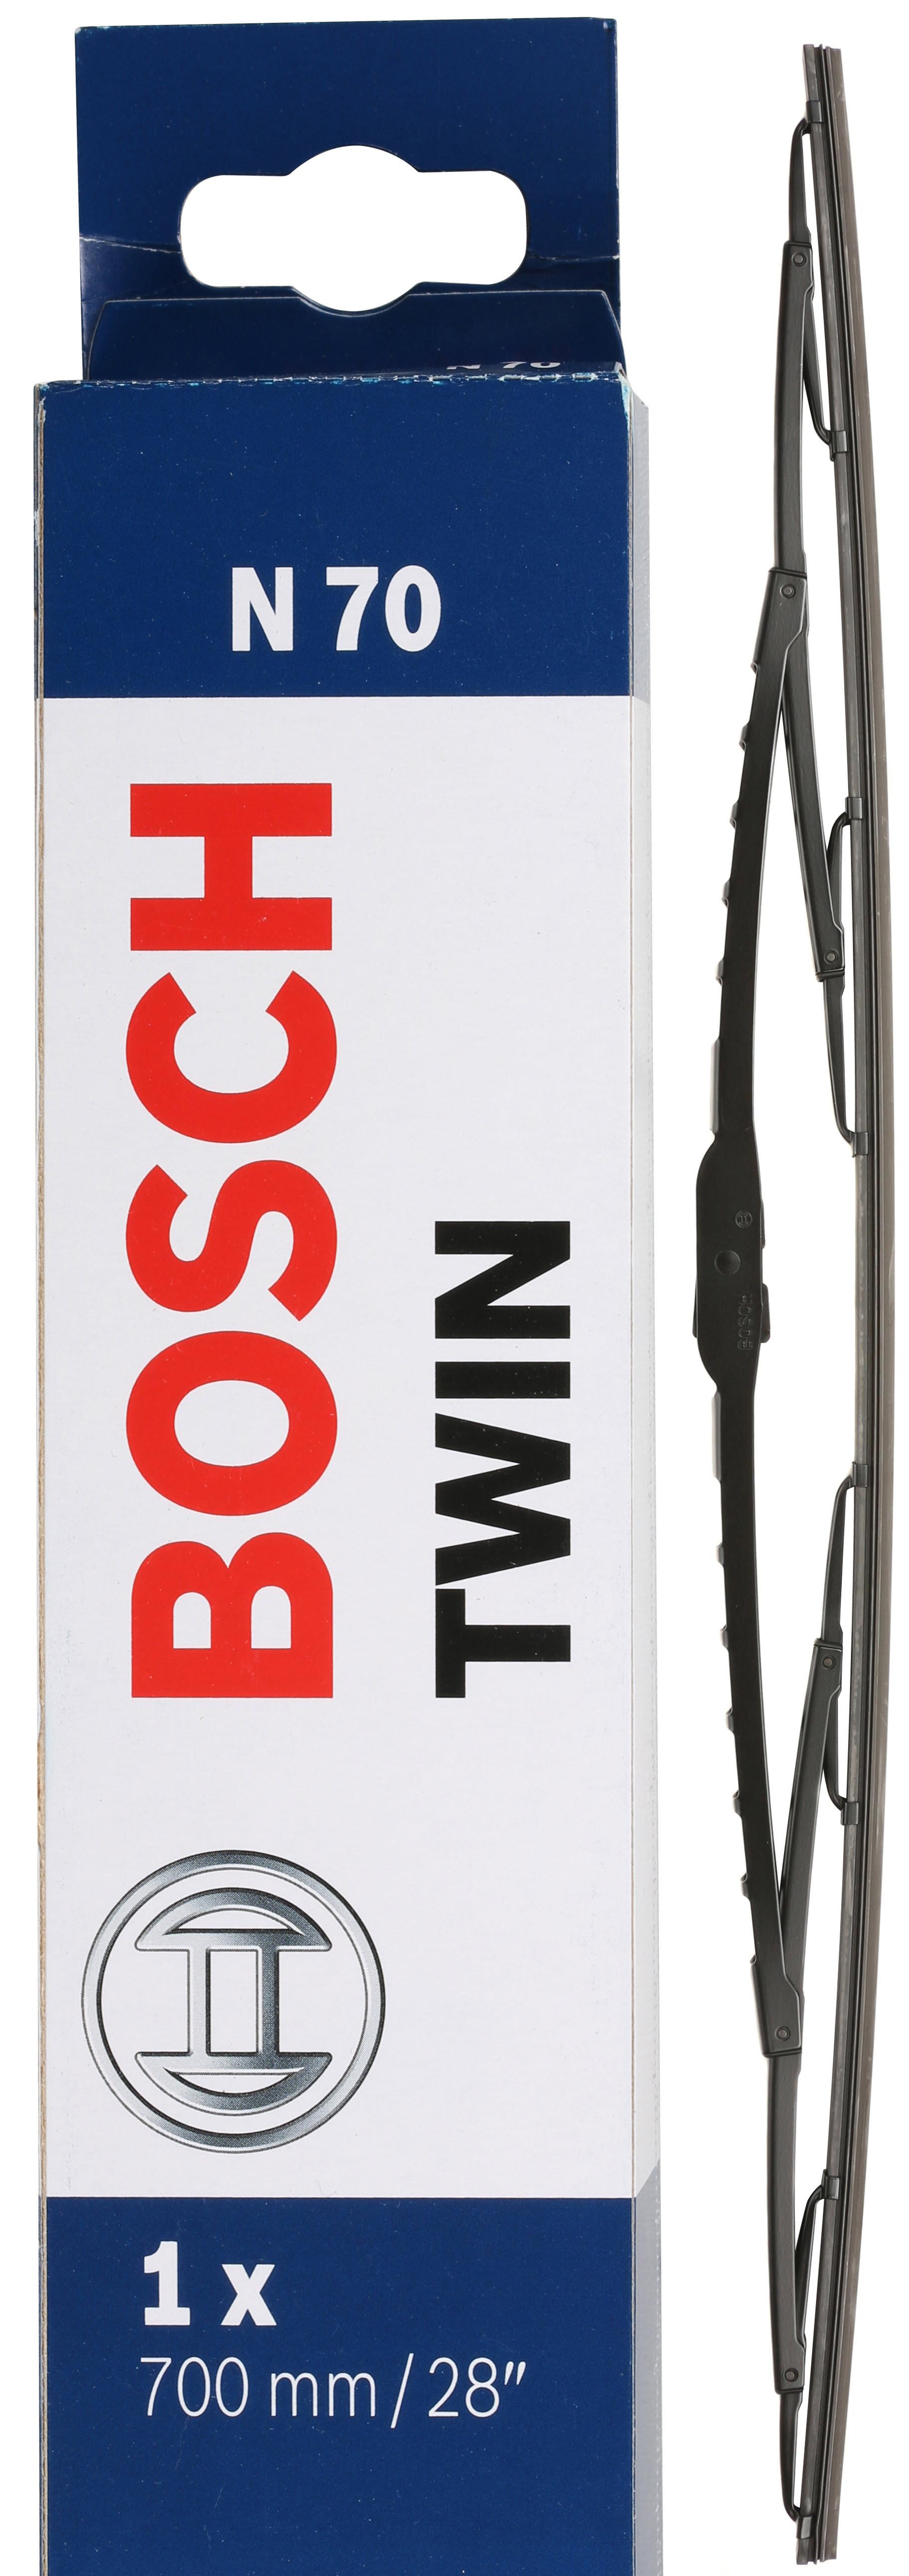 Bosch N70 Wiper Blade - Single